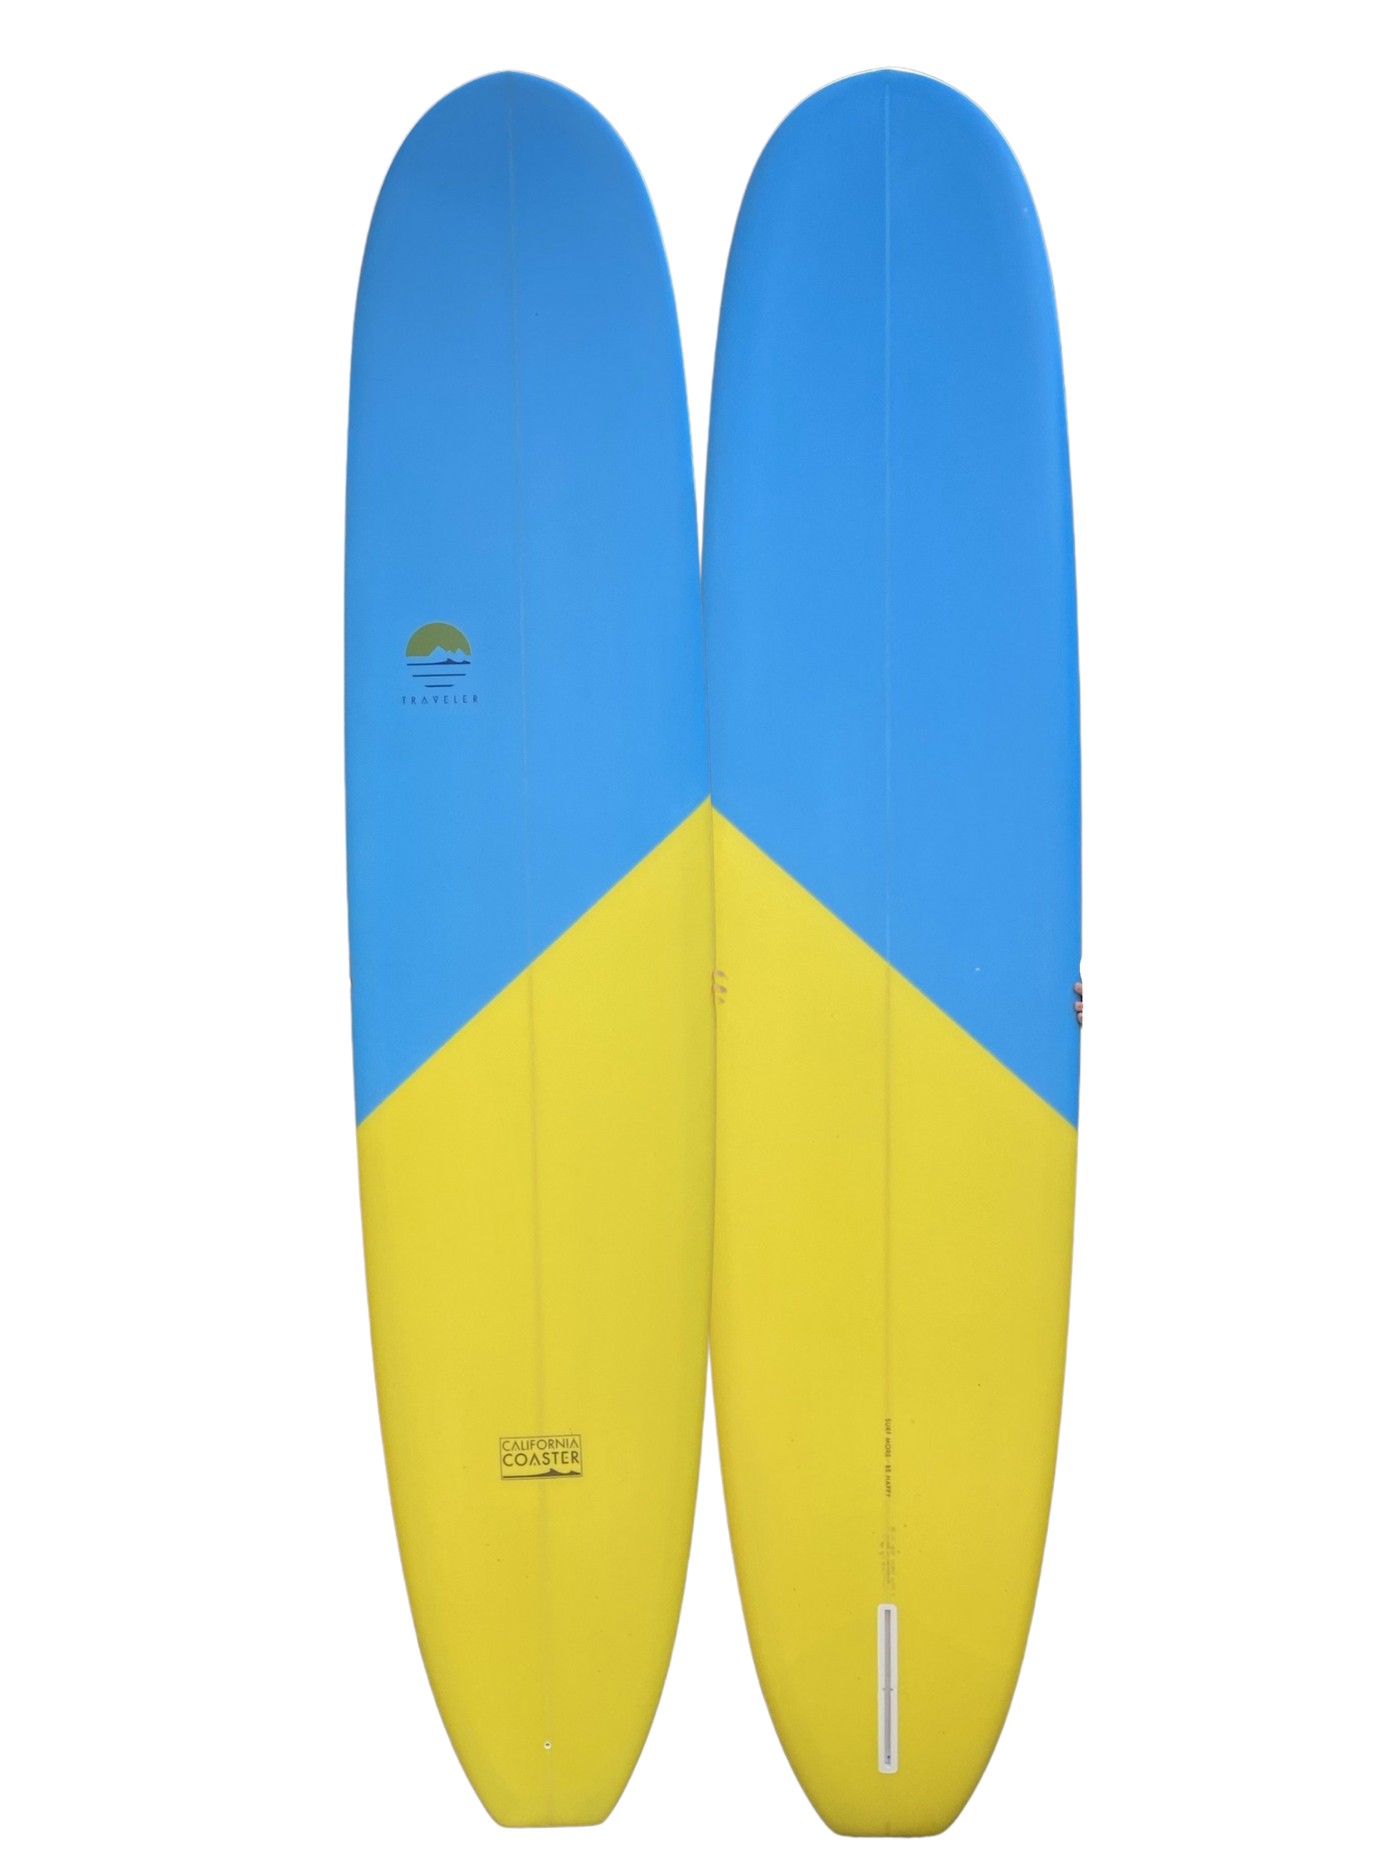 8'10 California Coaster - Light Blue / Yellow